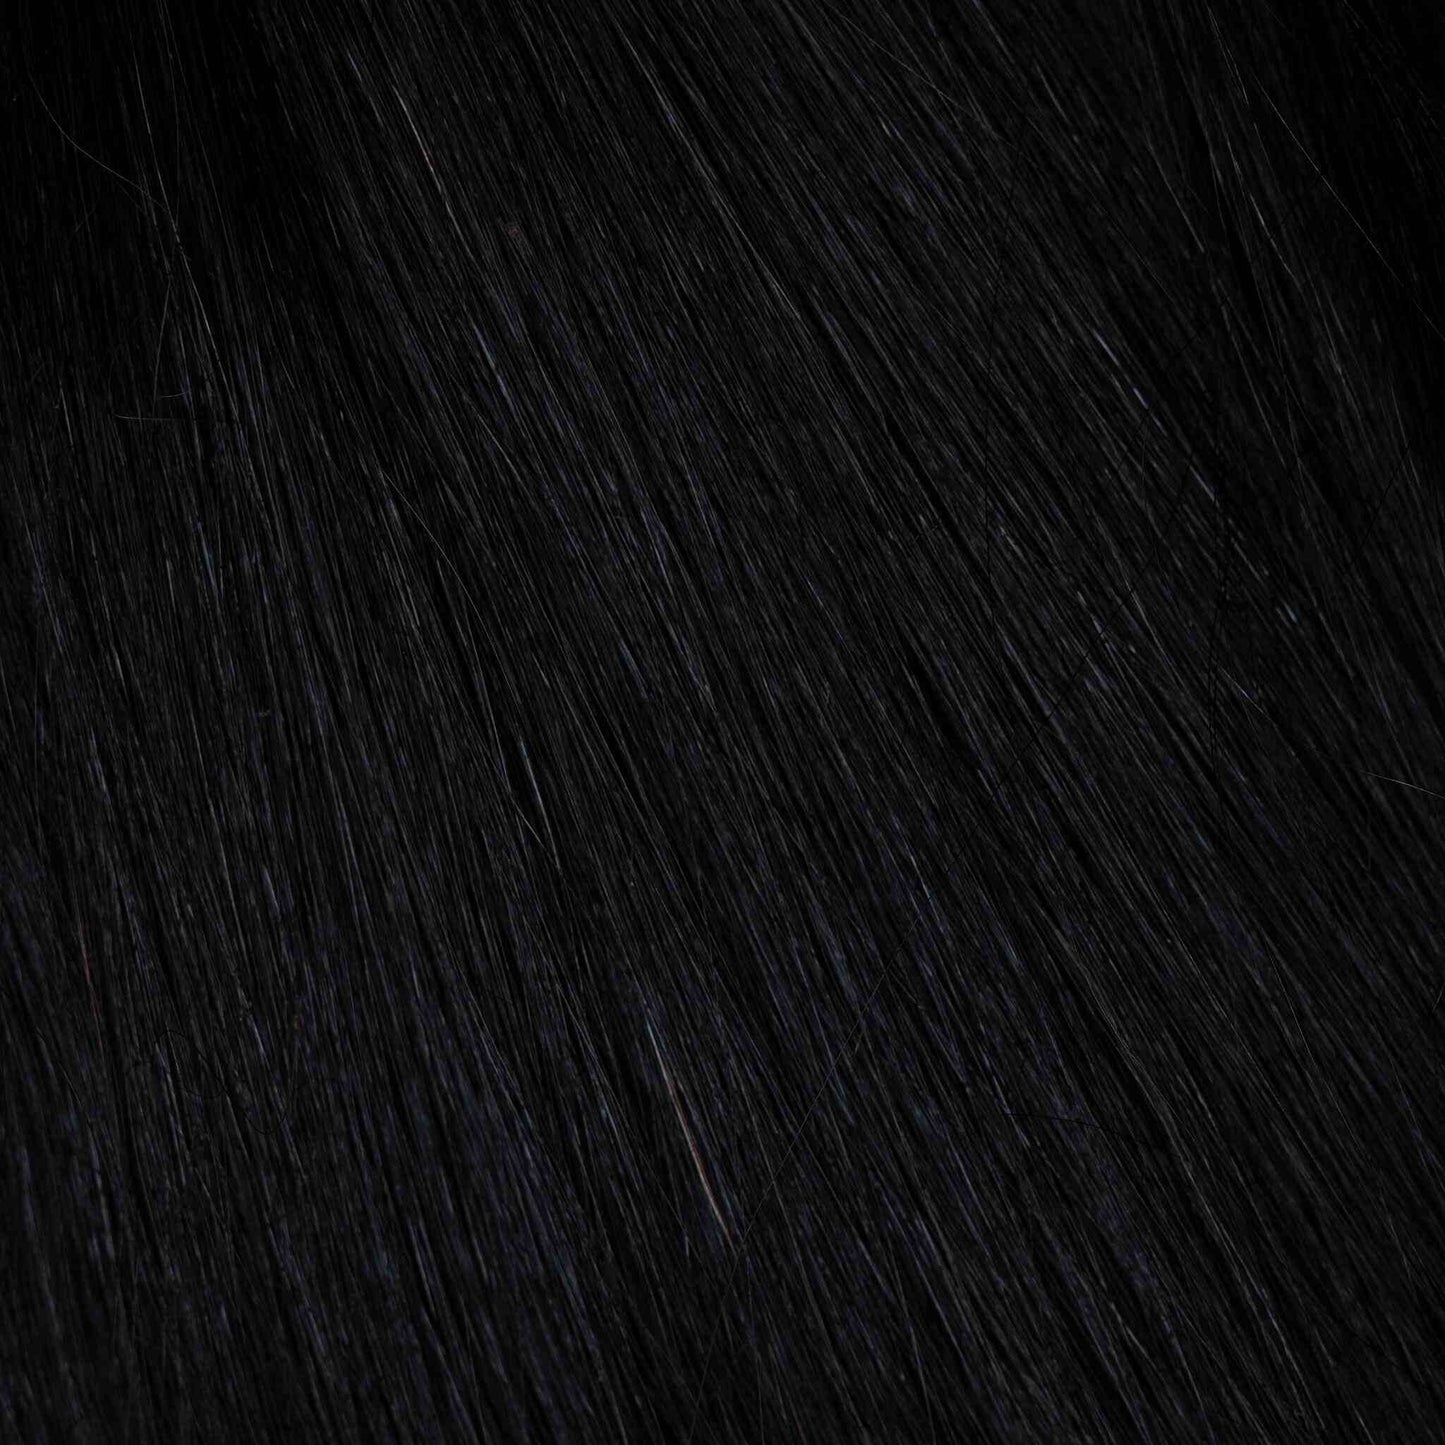 K-Tip 22" 25g Professional Hair Extensions - Jet Black #1